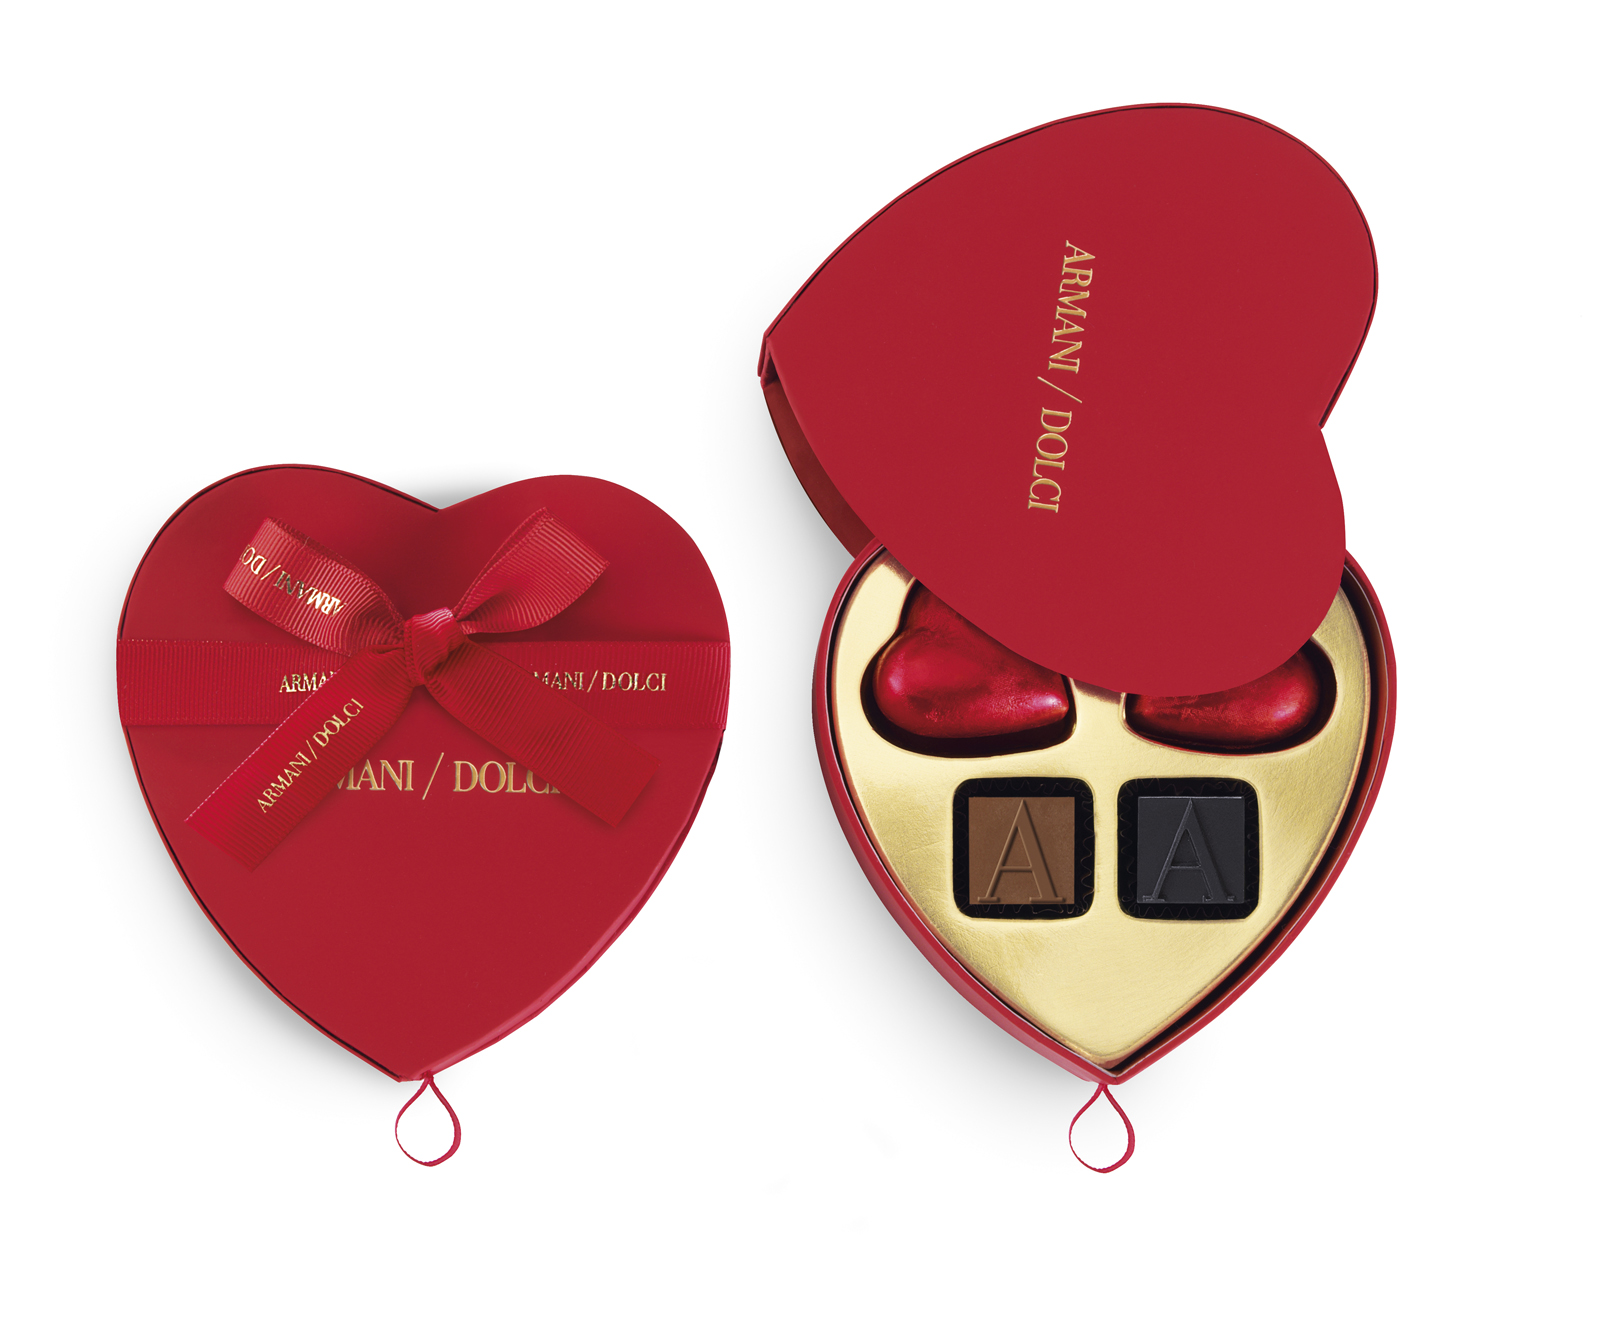 Armani/Dolci 2015情人節4顆心型巧克力+2顆任選巧克力禮盒(限量50份)，NTD$ 980元。 